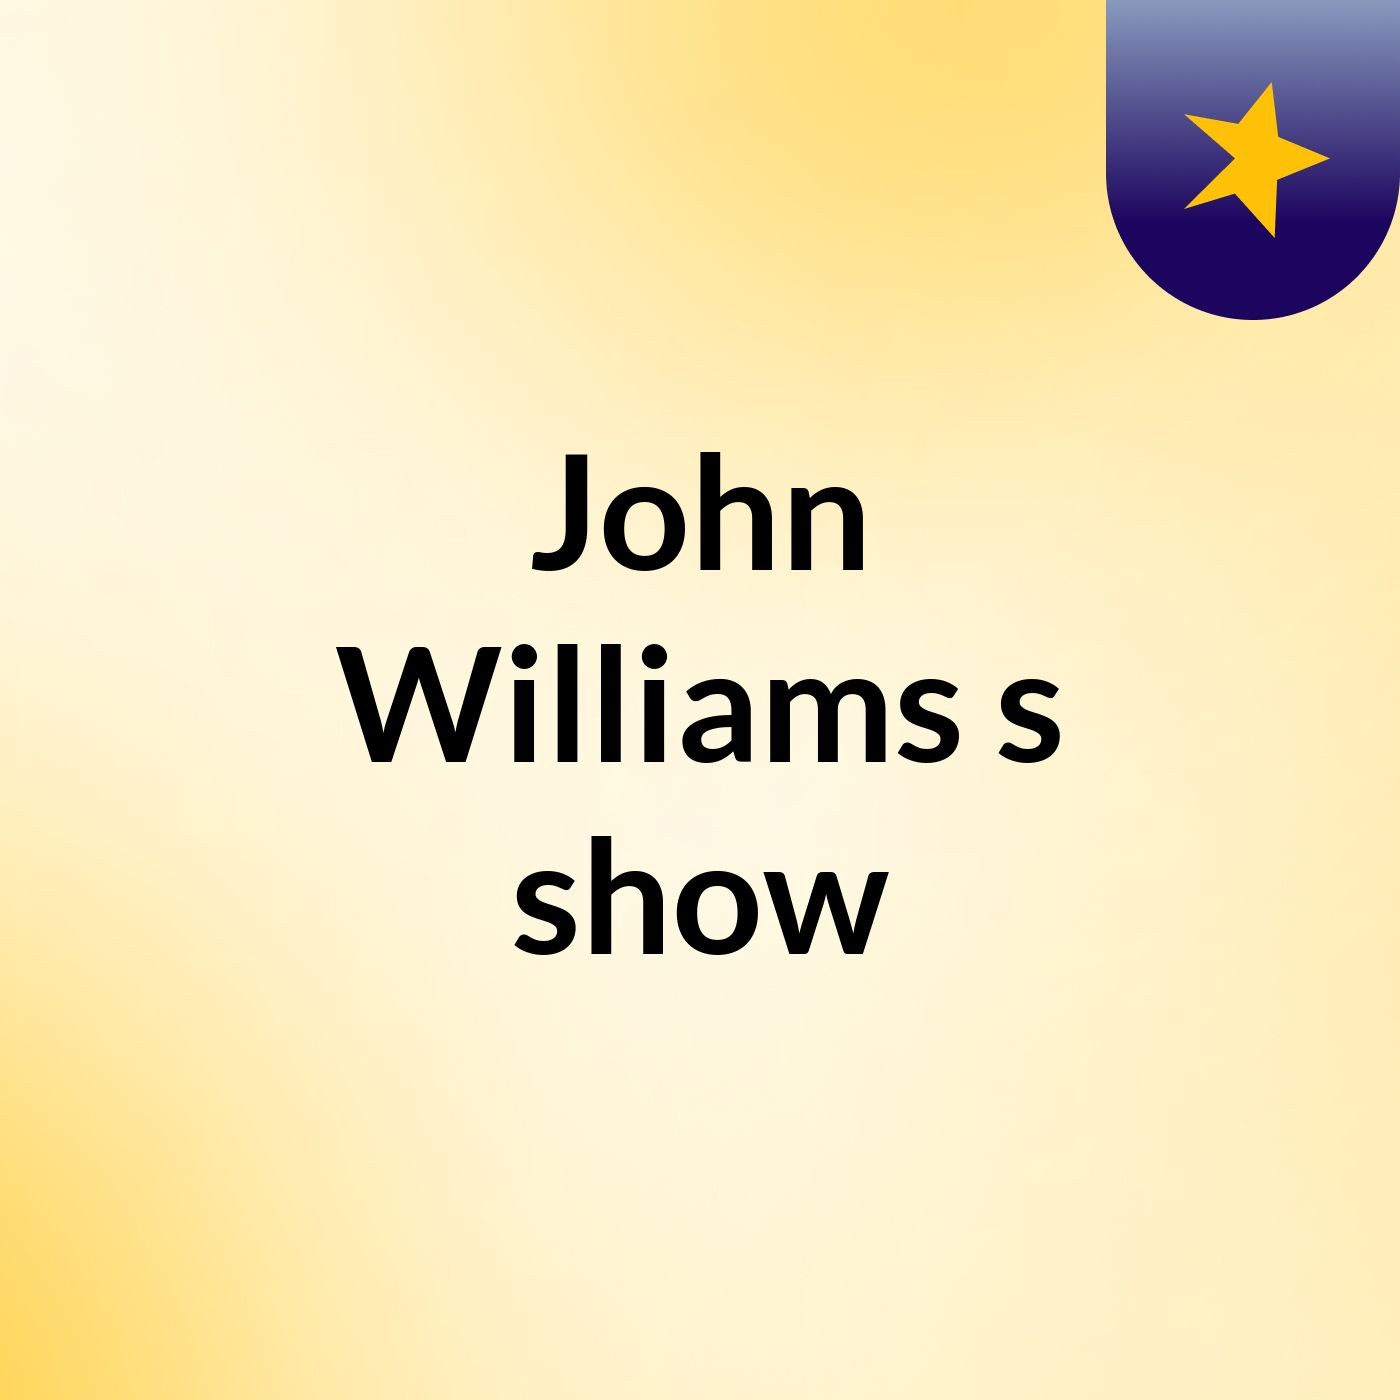 John Williams's show